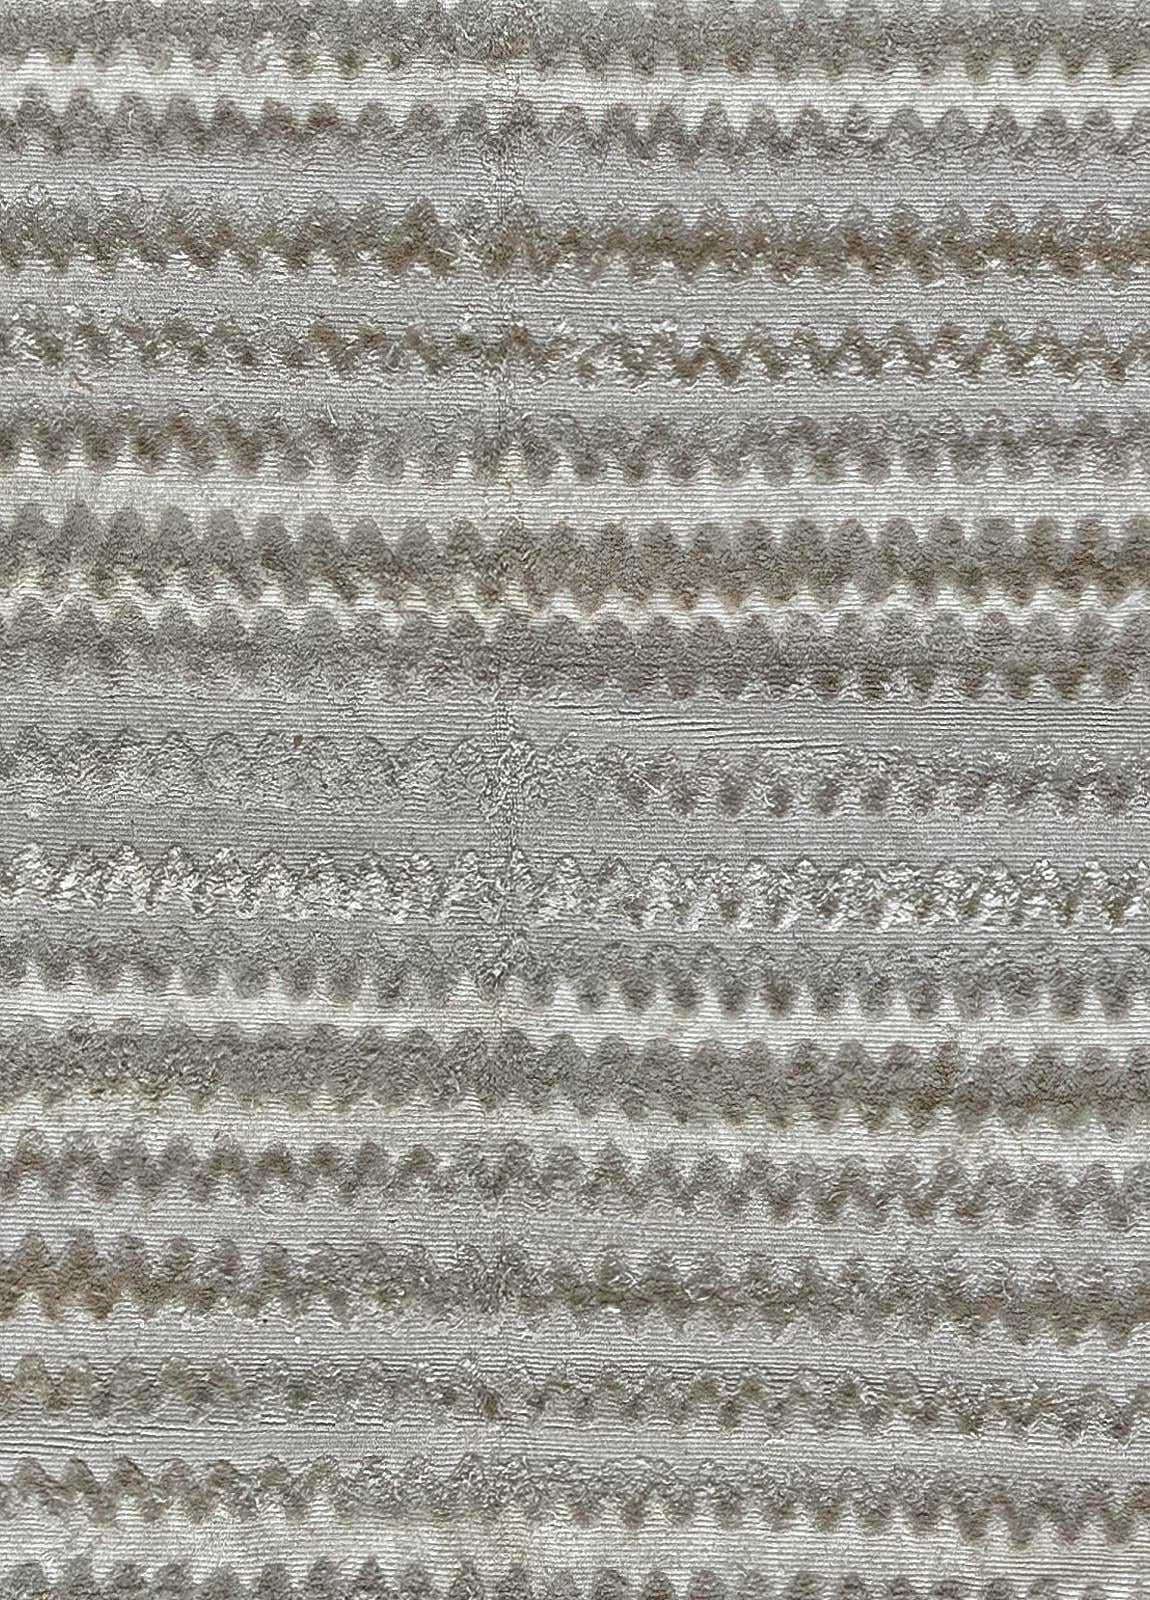 Contemporary zig zag design bamboo silk rug by Doris Leslie Blau.
Size: 11'3